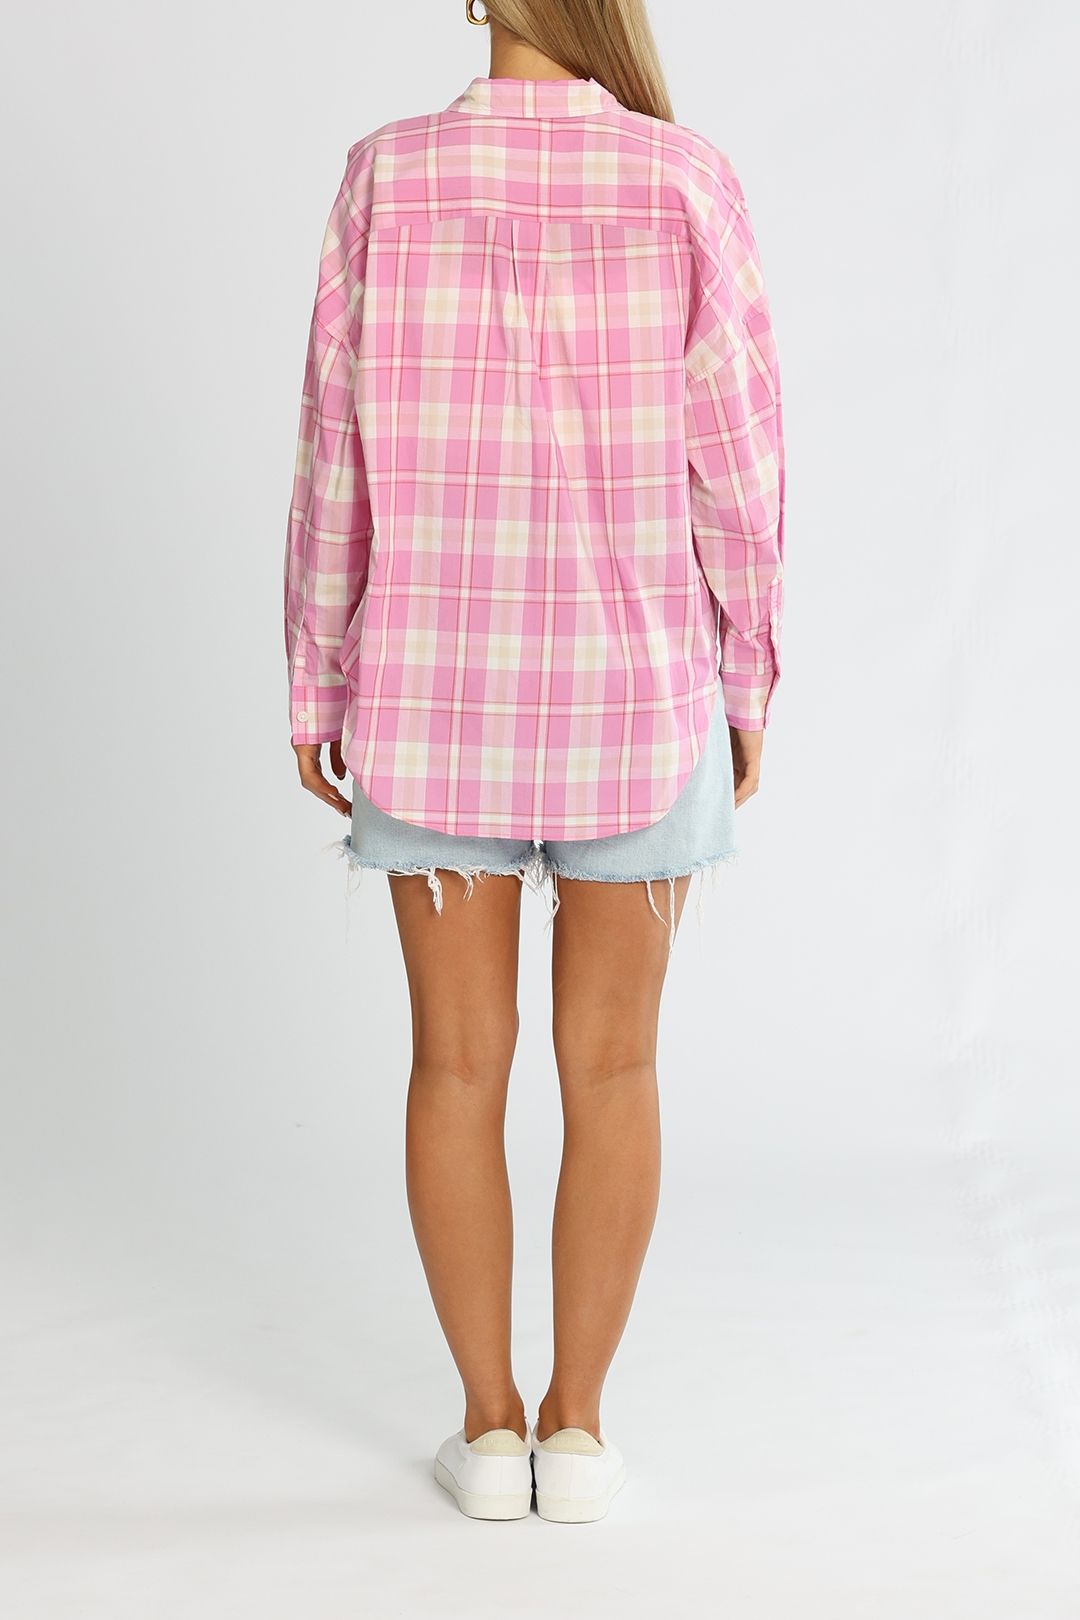 LMND Chiara Shirt Pink Check Collared